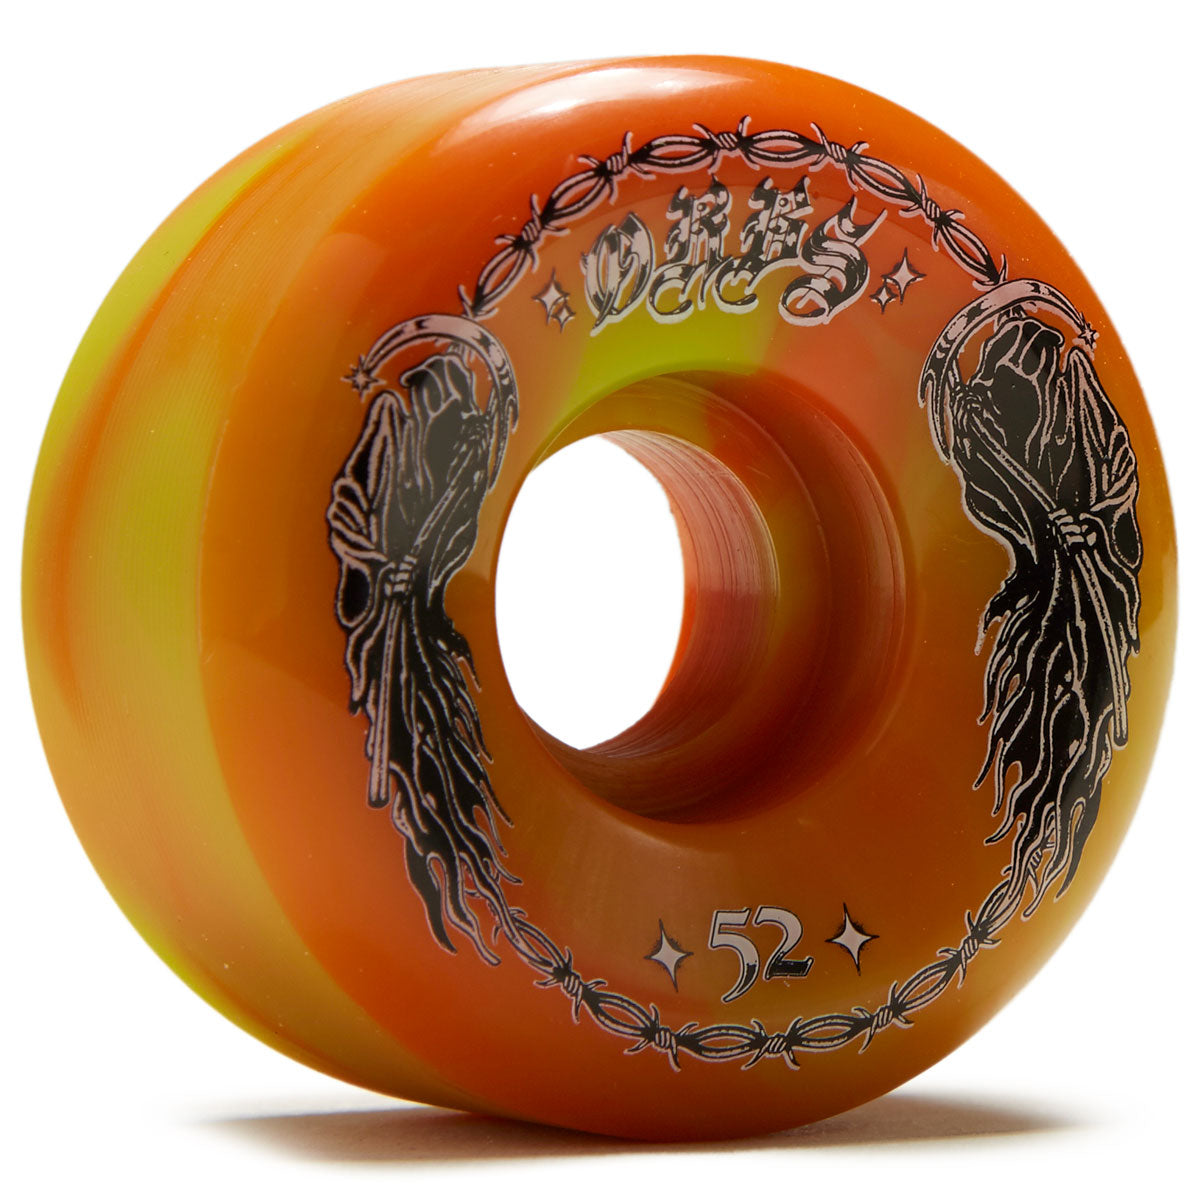 Welcome Orbs Specters '23 Conical 99A Skateboard Wheels - Green/Orange Swirl - 52mm image 1